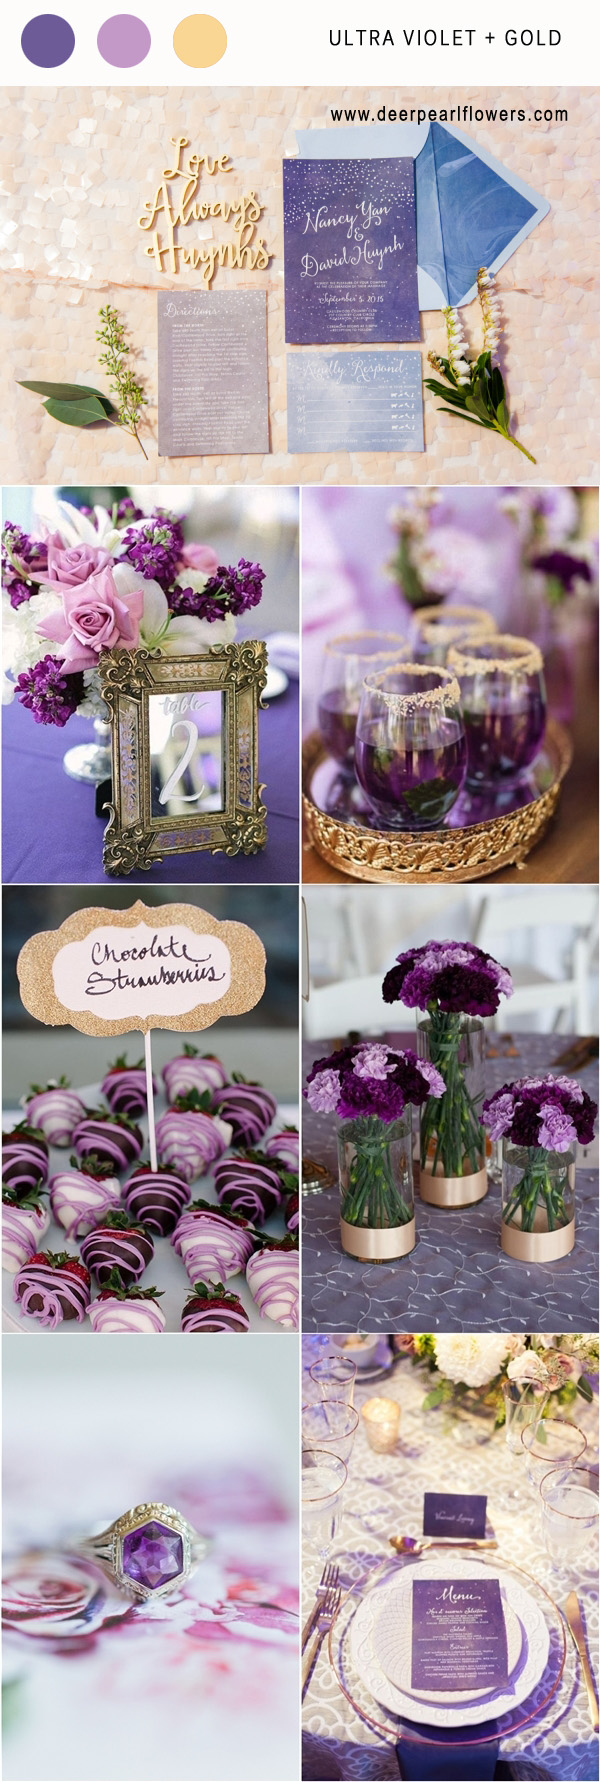 pantone wedding color 2018- Ultra violet and gold wedding color palette idea